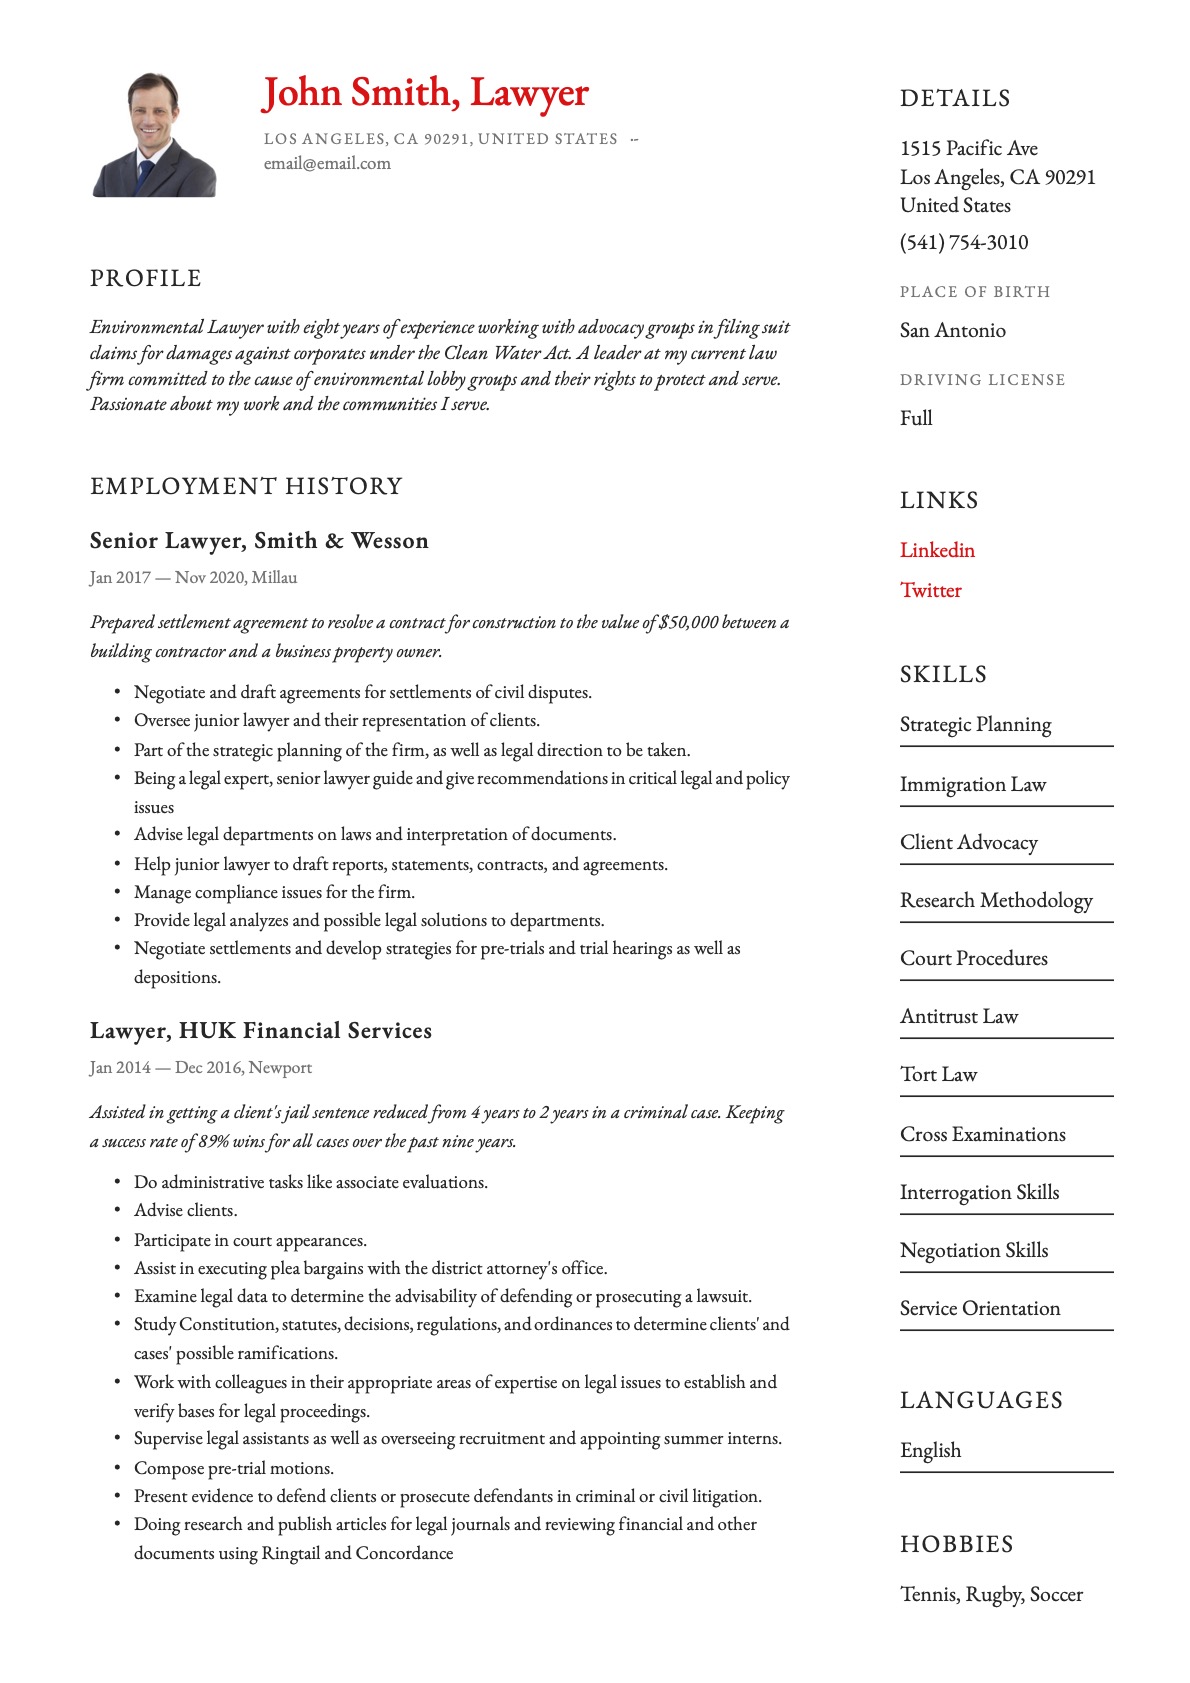 Example resume Lawyer-13